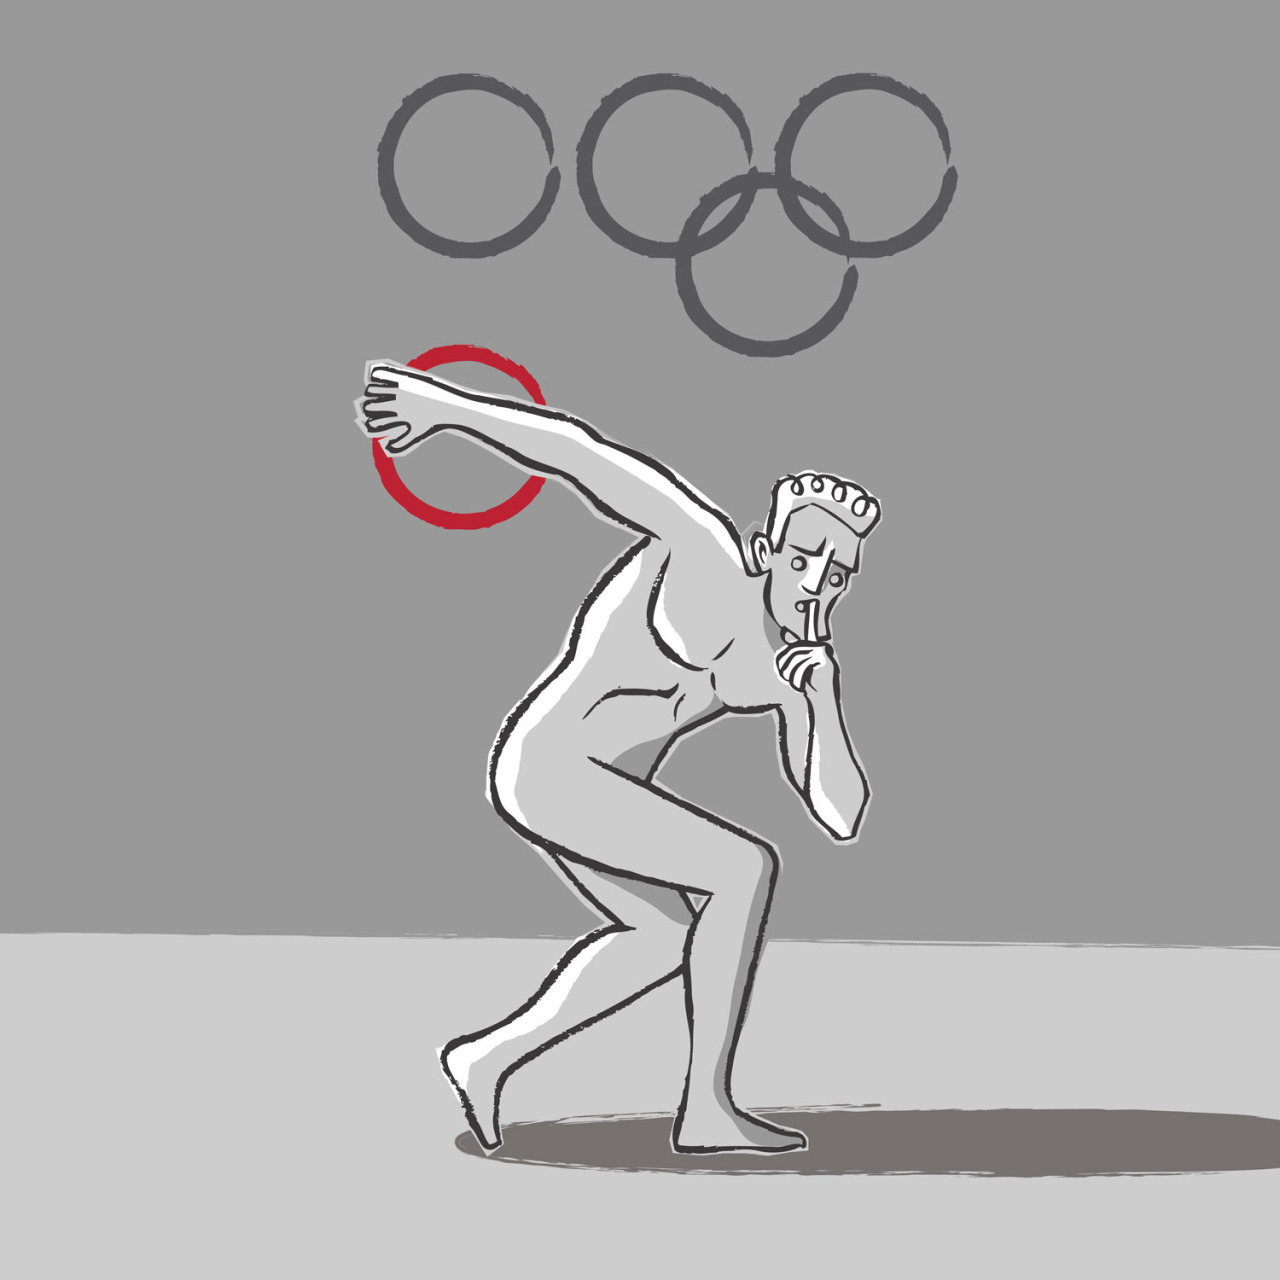 776, prima Olimpiade in Grecia (© Nicola Ferrarese)